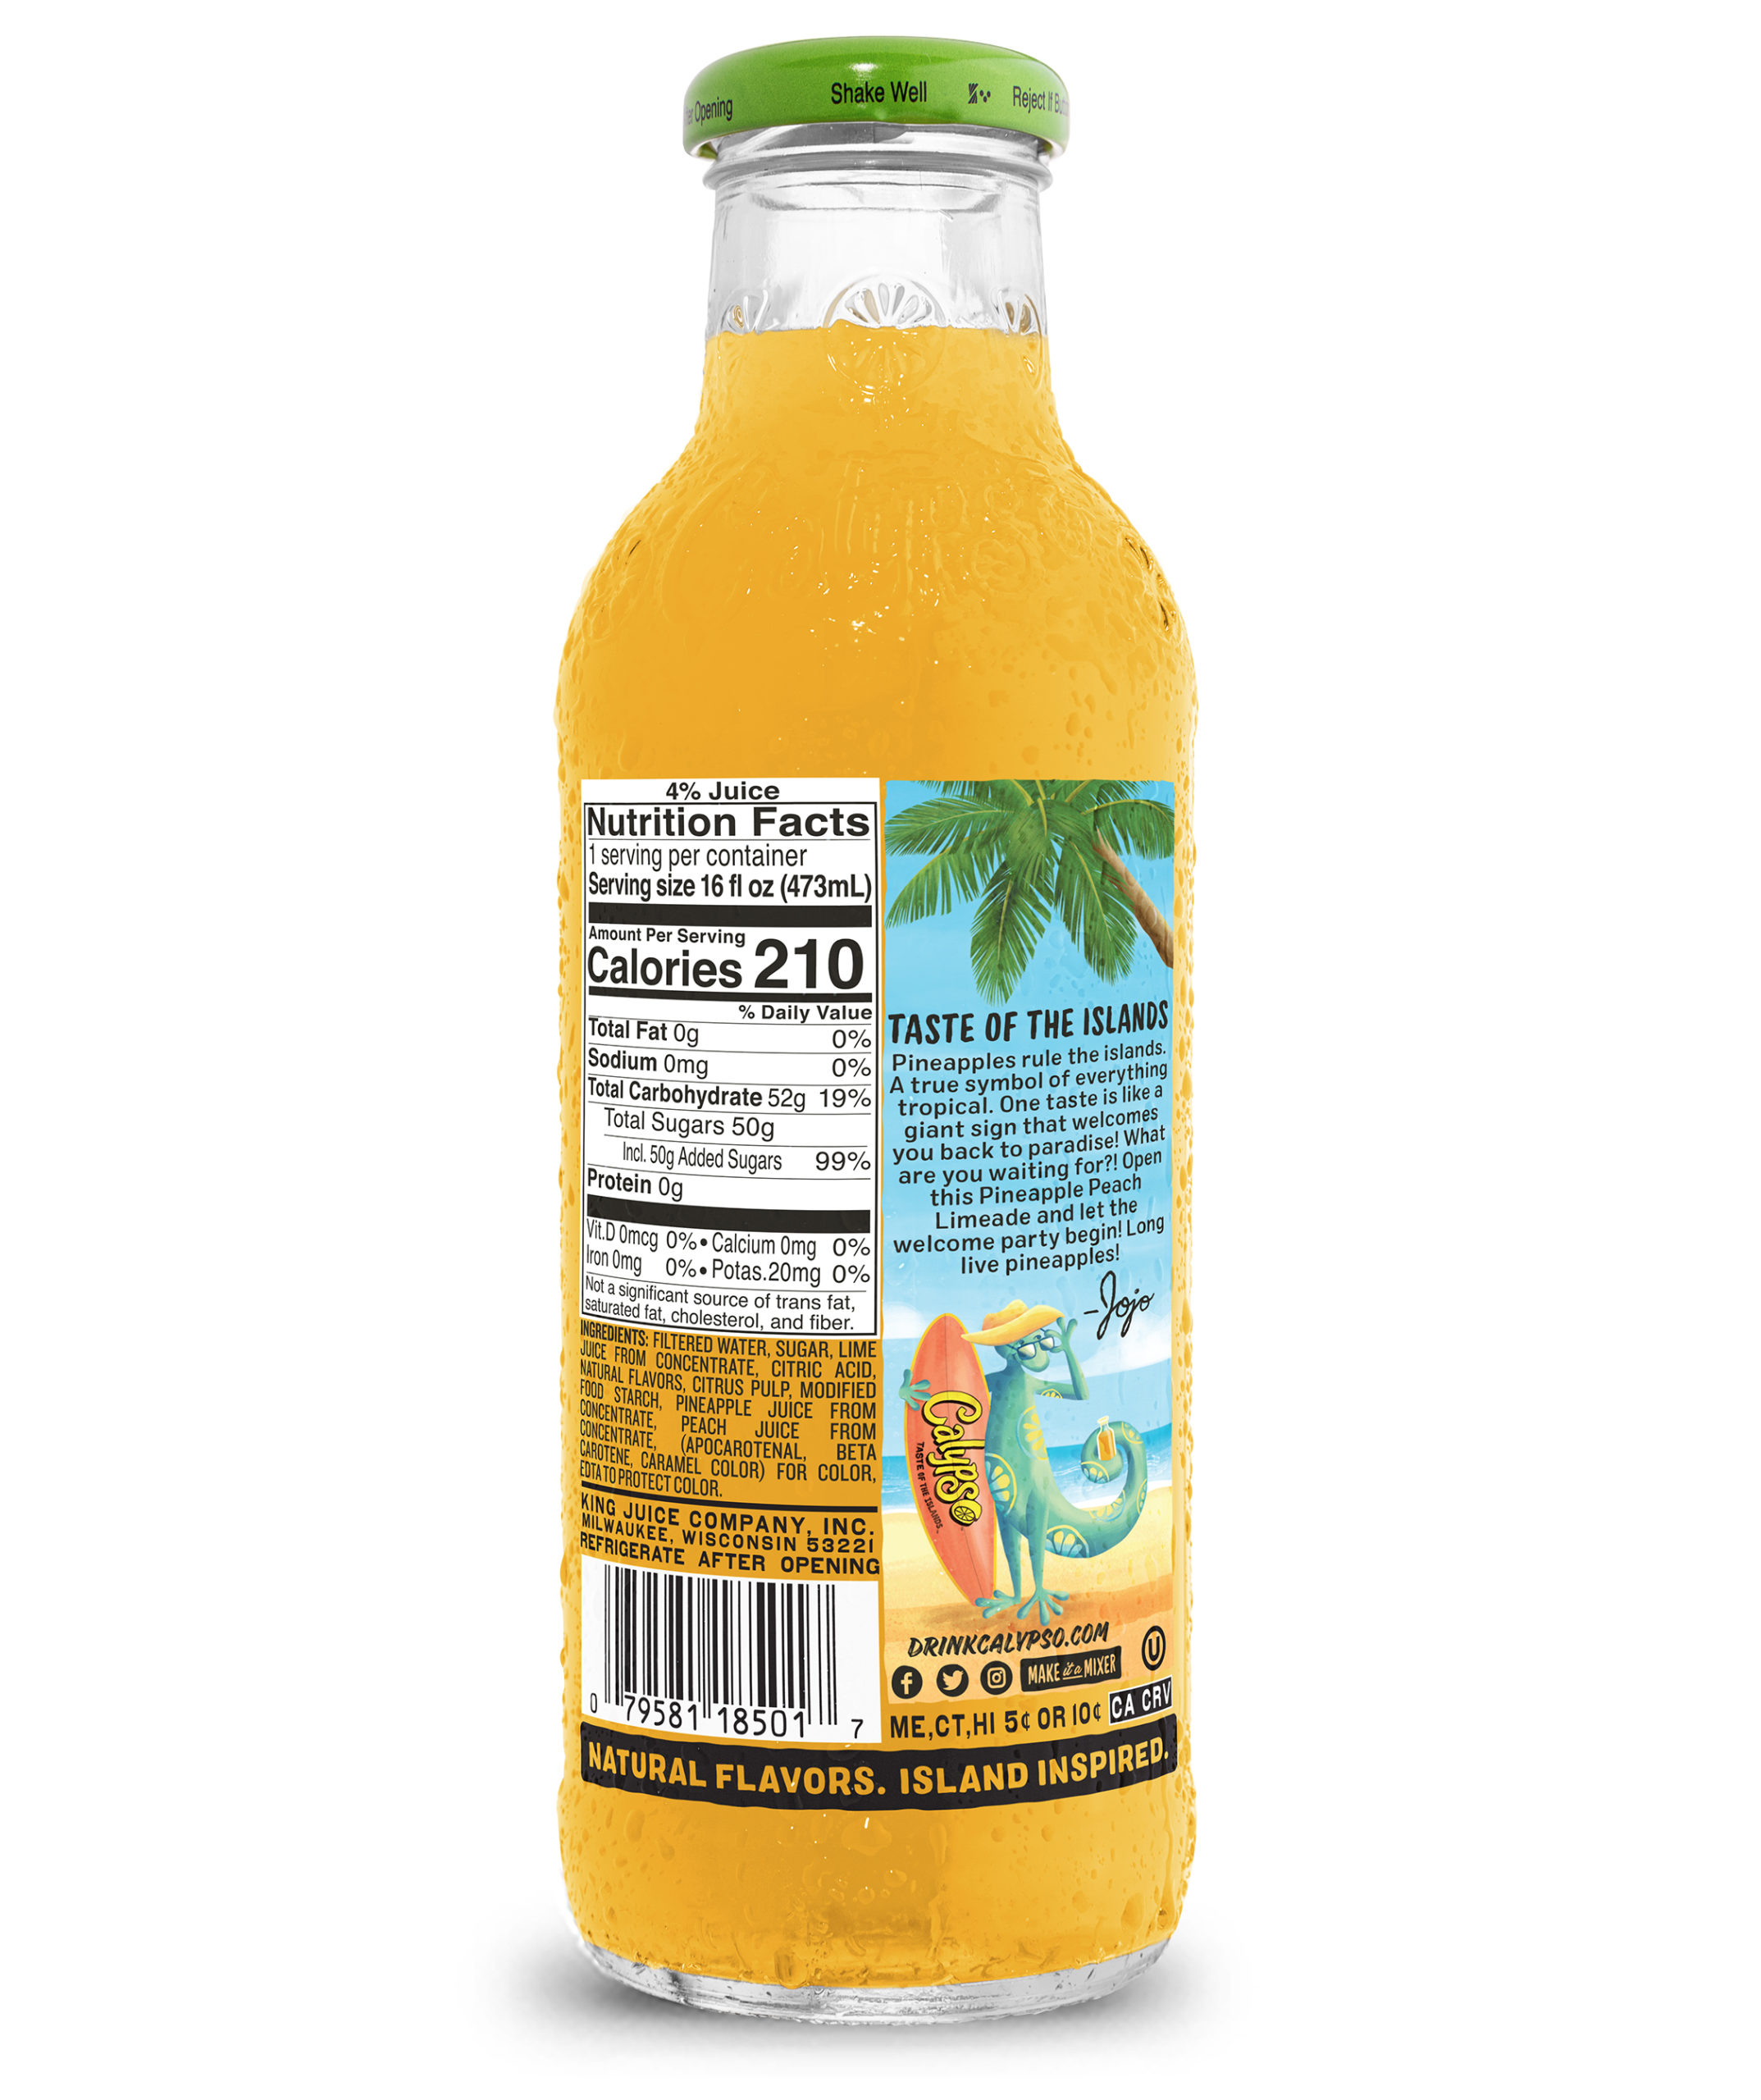 Calypso - Limonade | Pineapple Peach 473ml